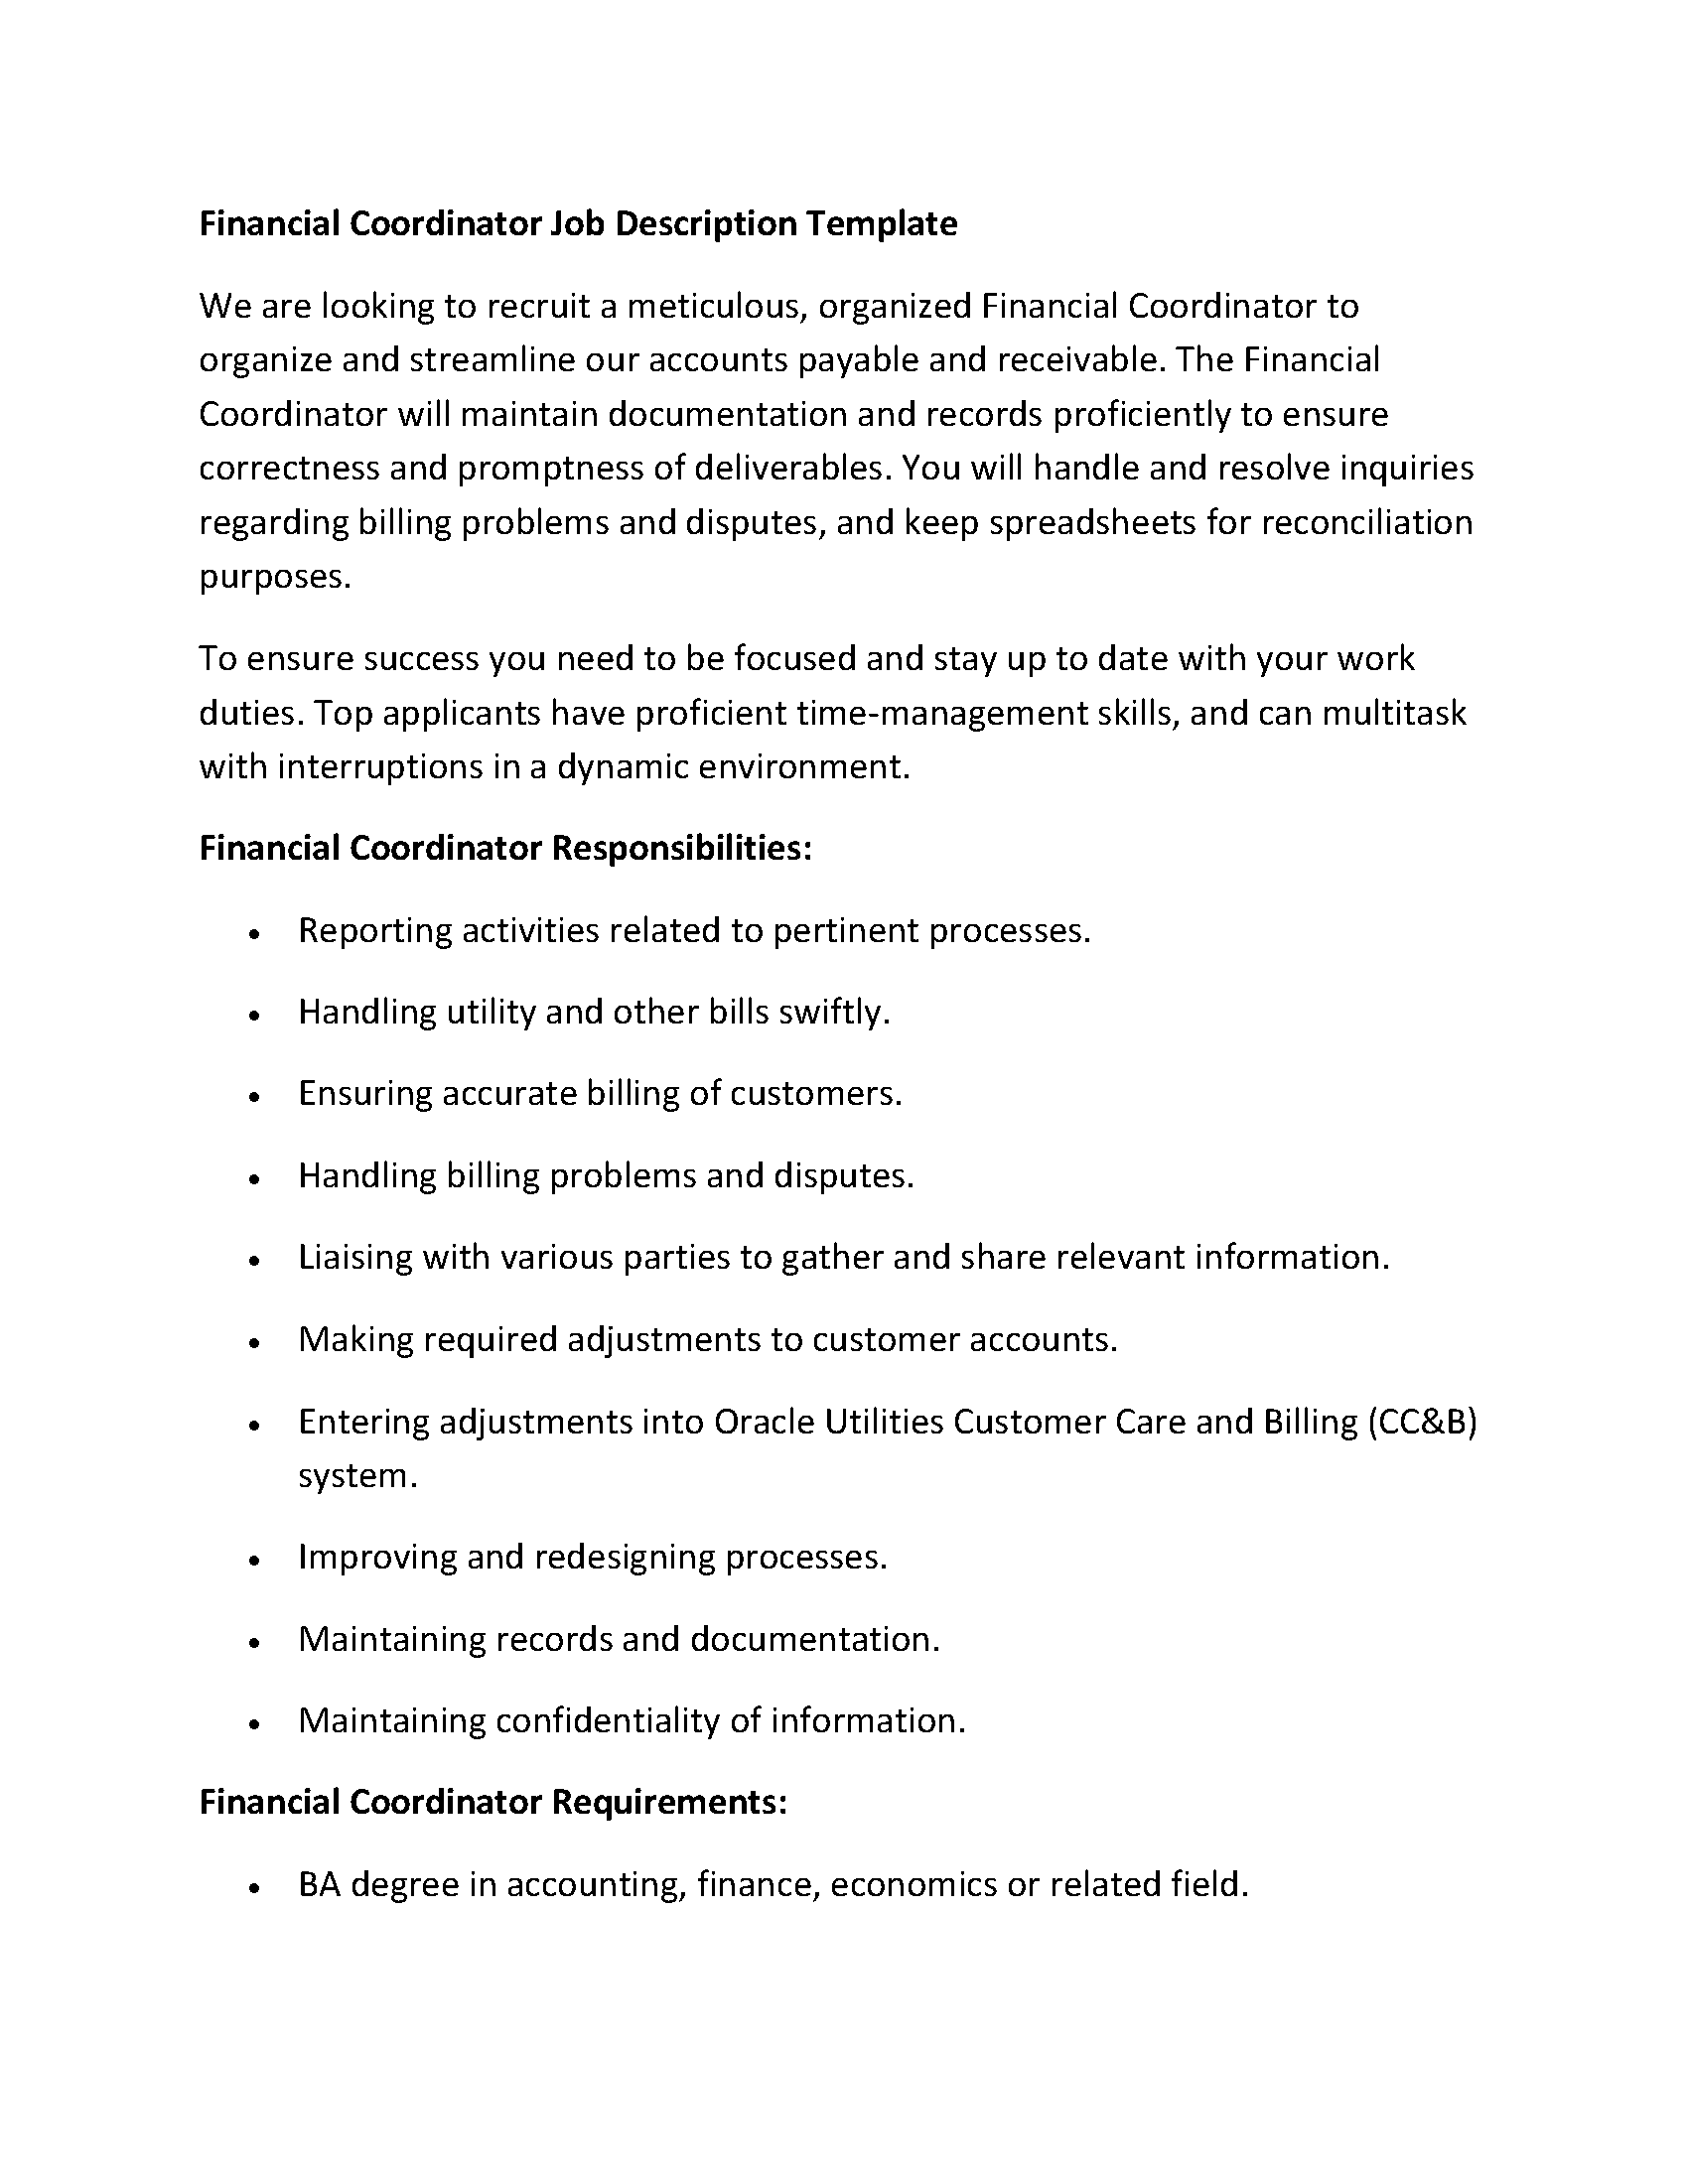 Financial Coordinator Job Description Template